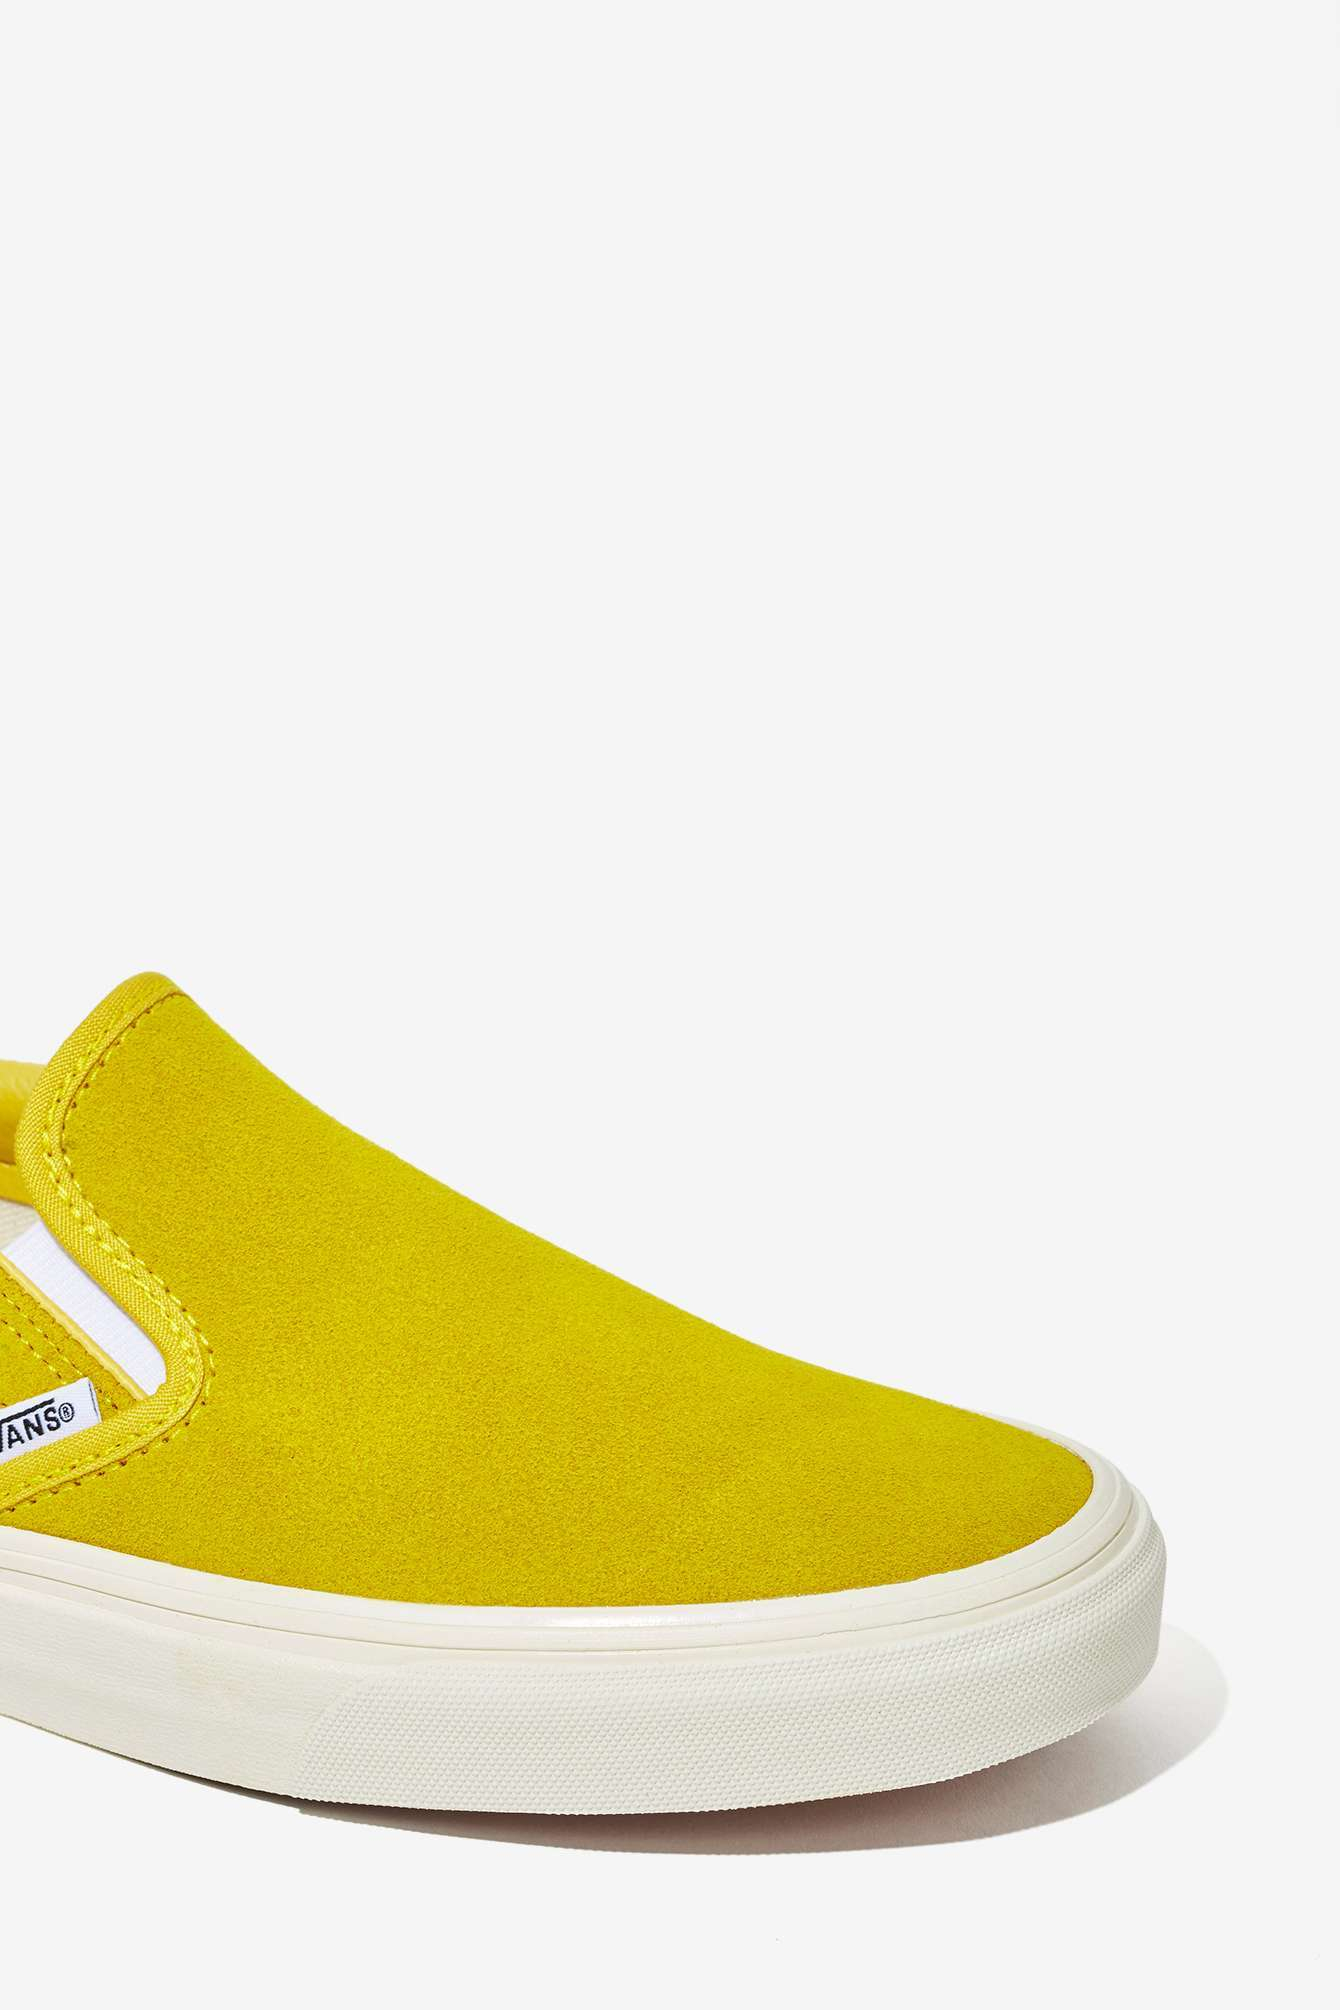 Nasty Gal Vans Classic Slip-On Sneaker - Mustard Suede in Yellow | Lyst